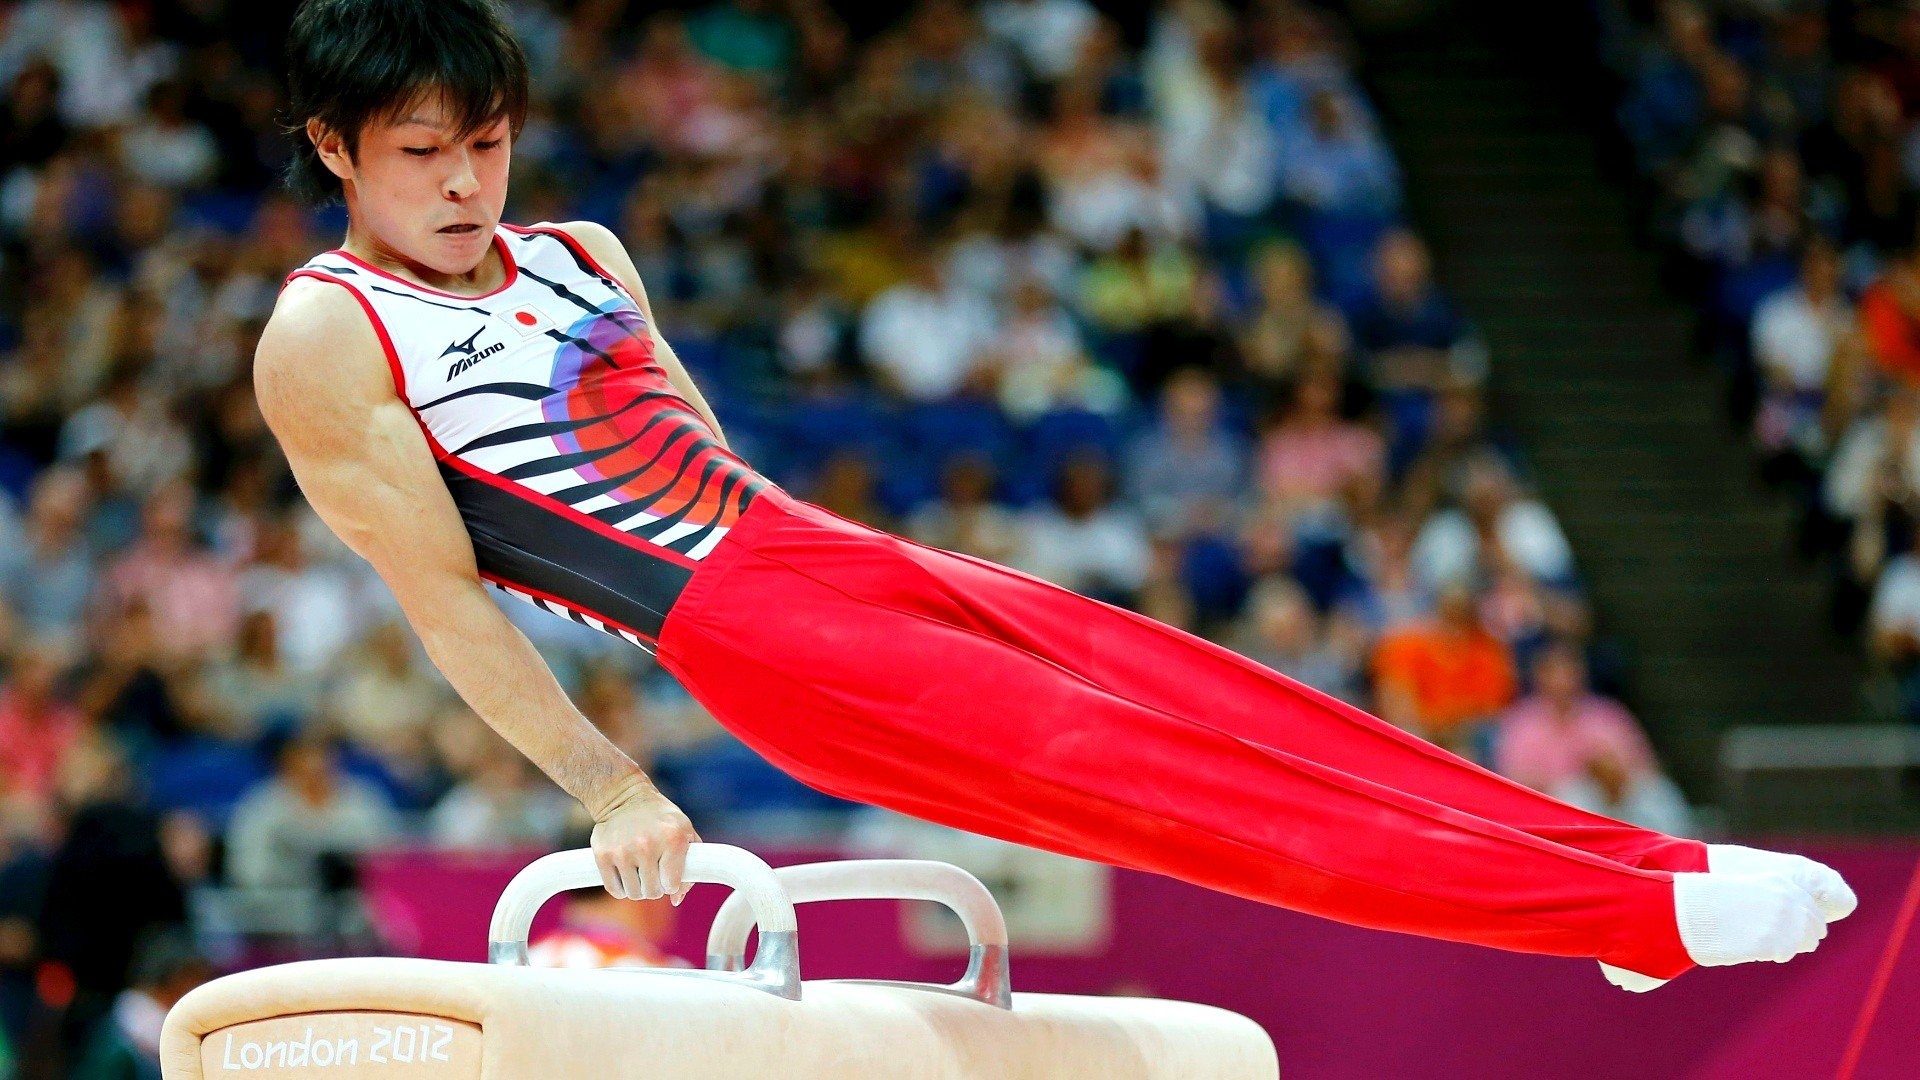 Acrobatic Sports: Japanese athlete, 2012, London, Kohei Uchimura, Pommel horse. 1920x1080 Full HD Wallpaper.